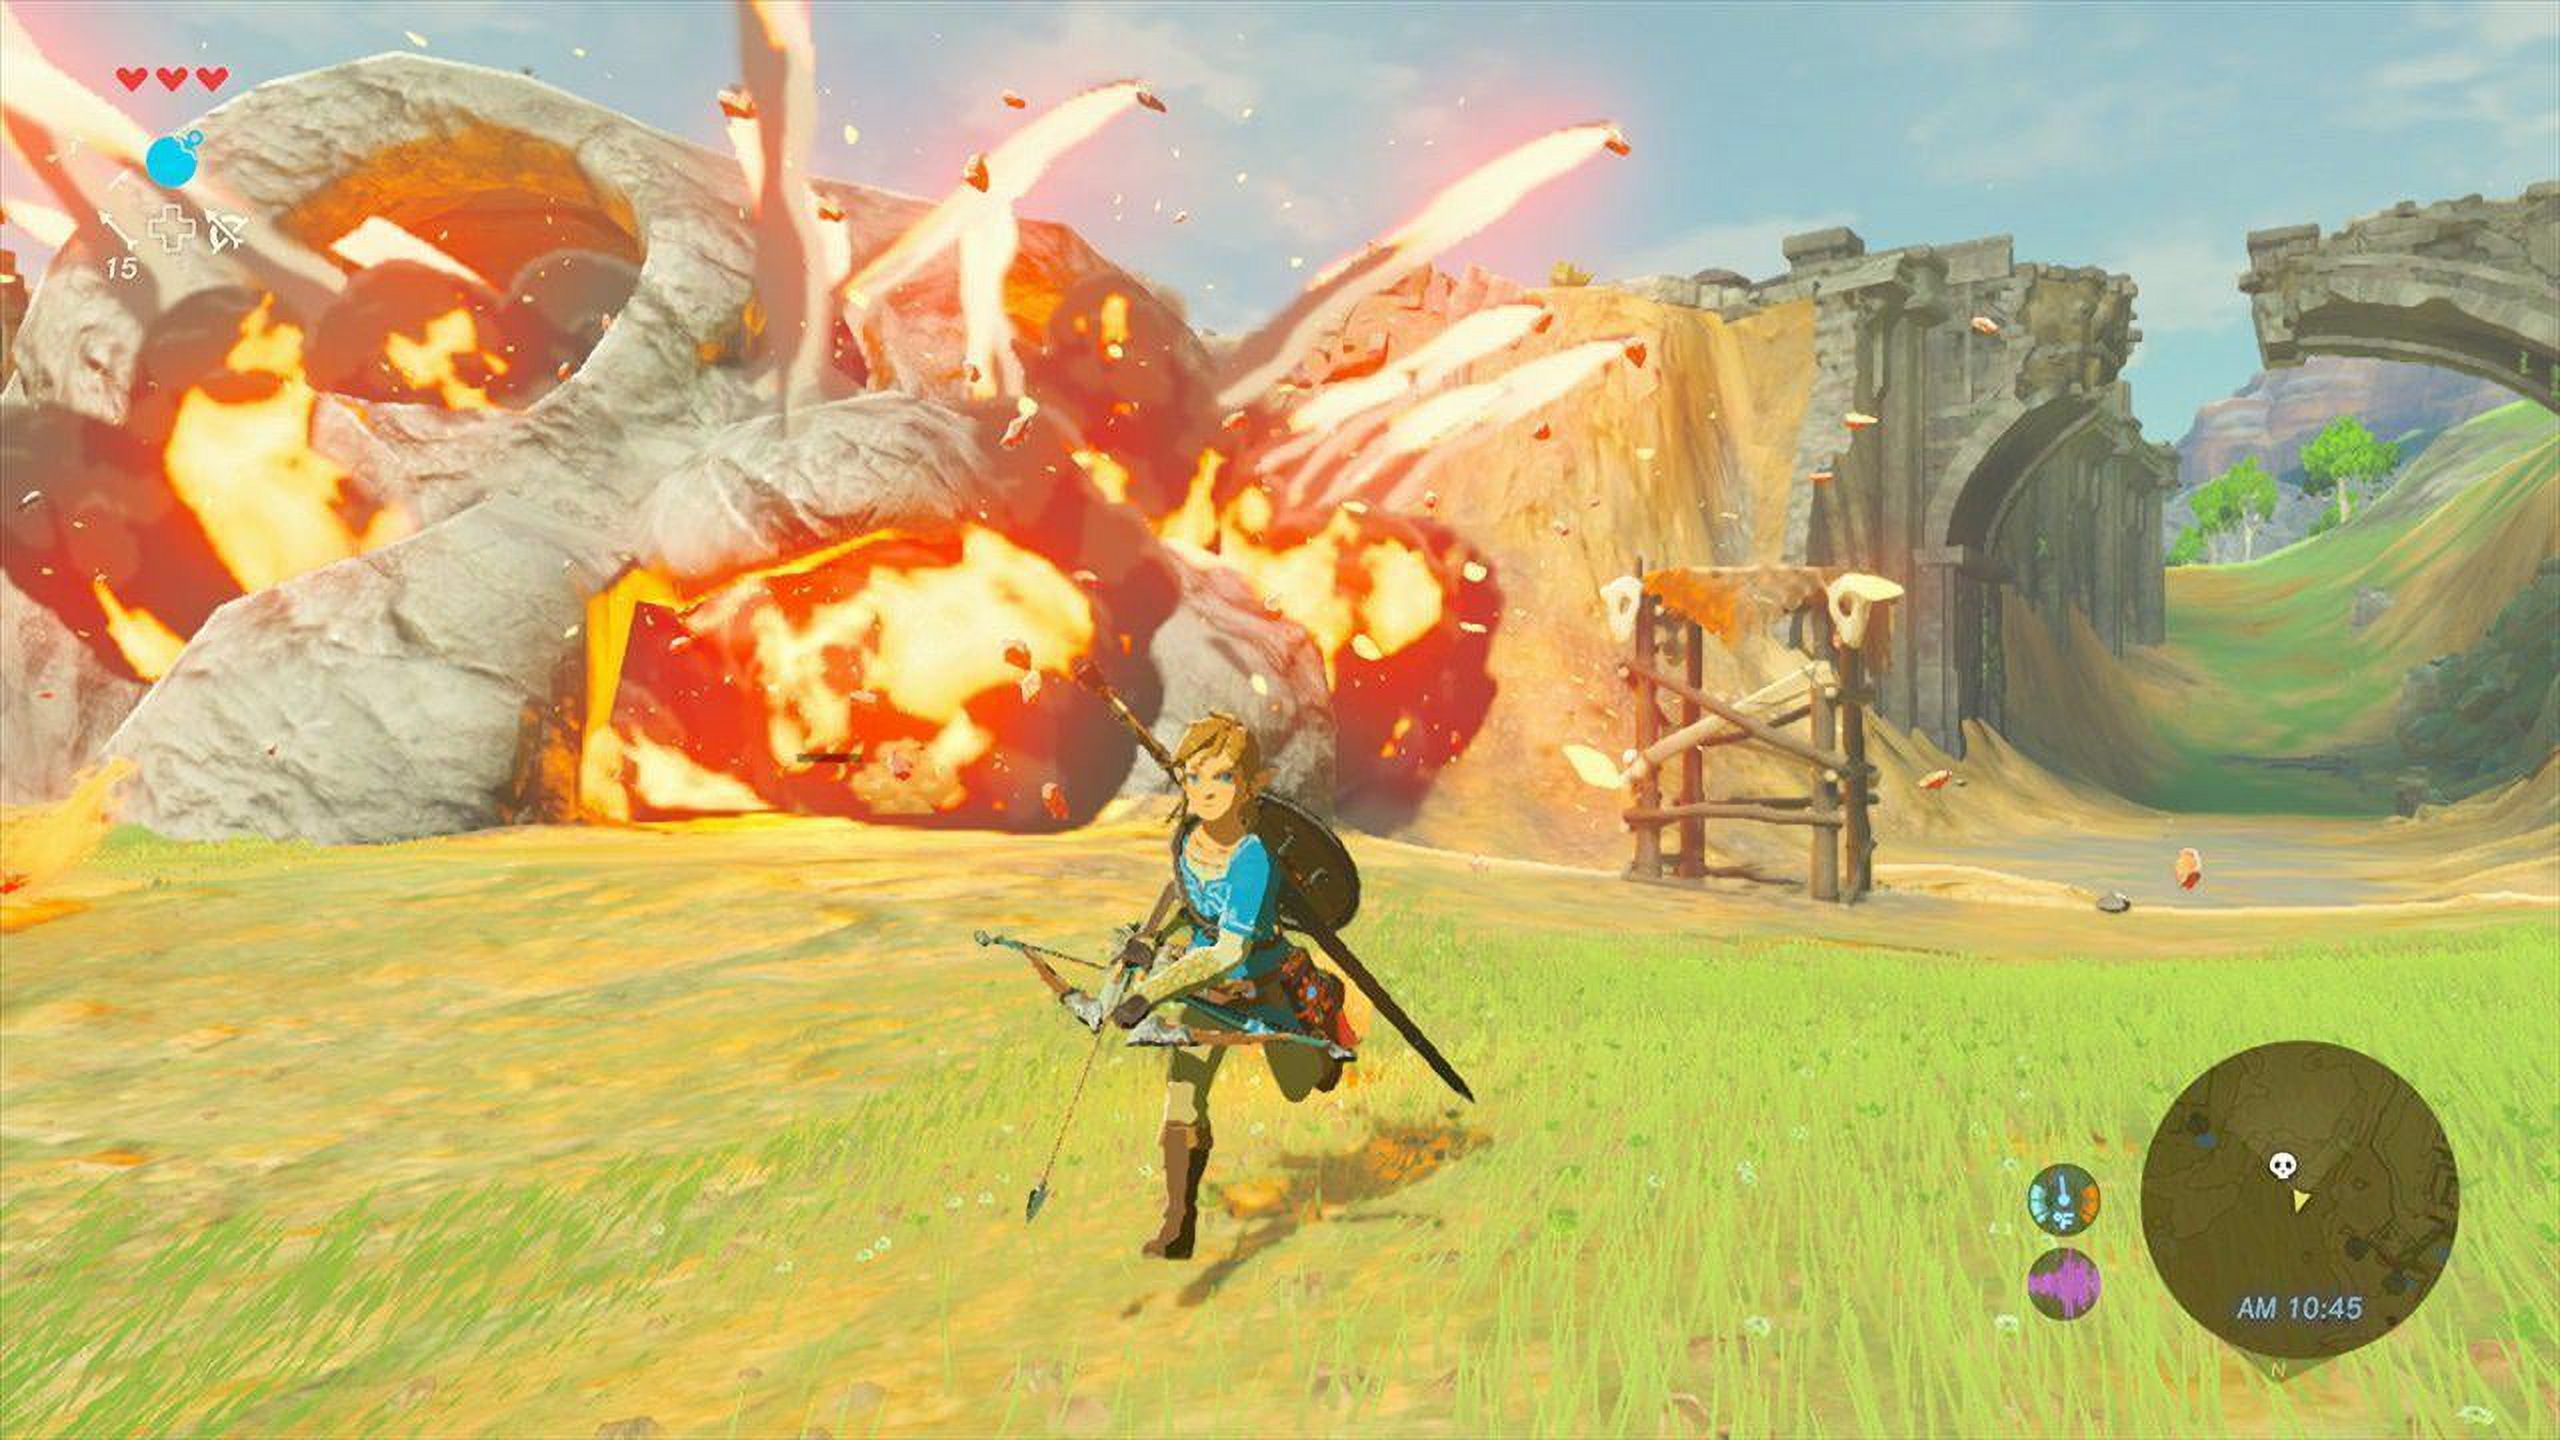 The Legend of Zelda: Breath of the Wild - Nintendo Switch - image 8 of 17